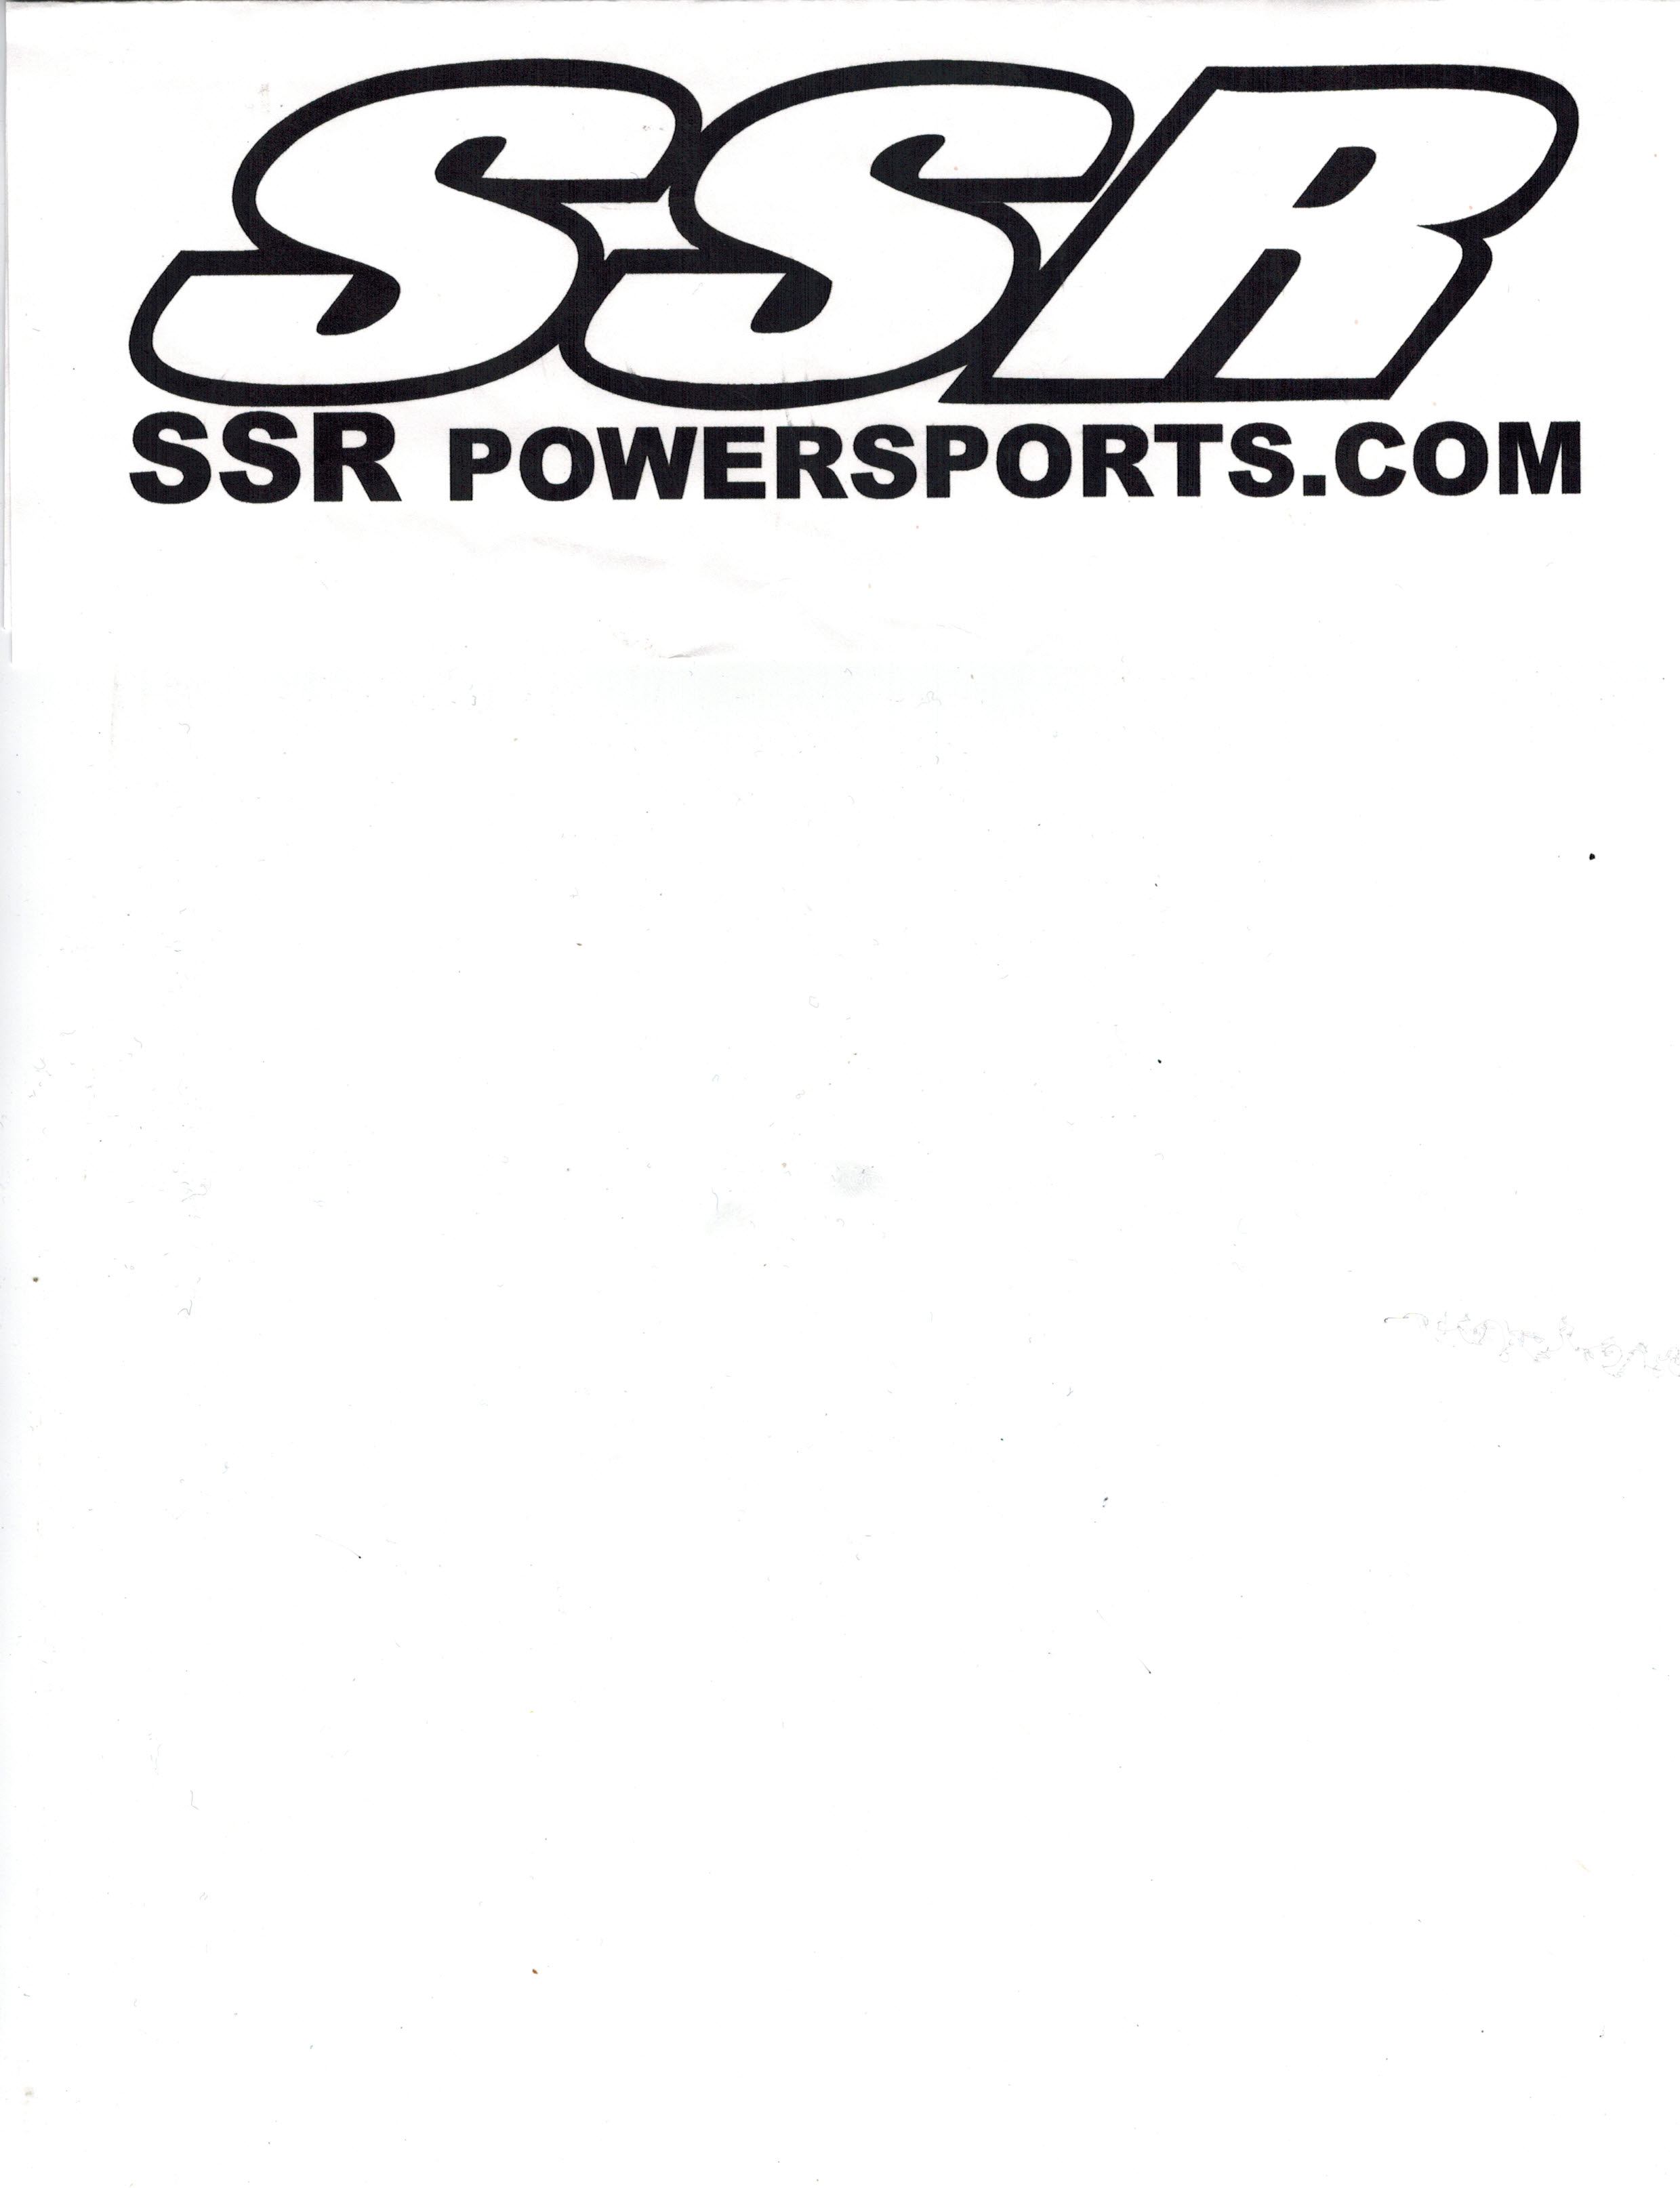 SSR Powersports